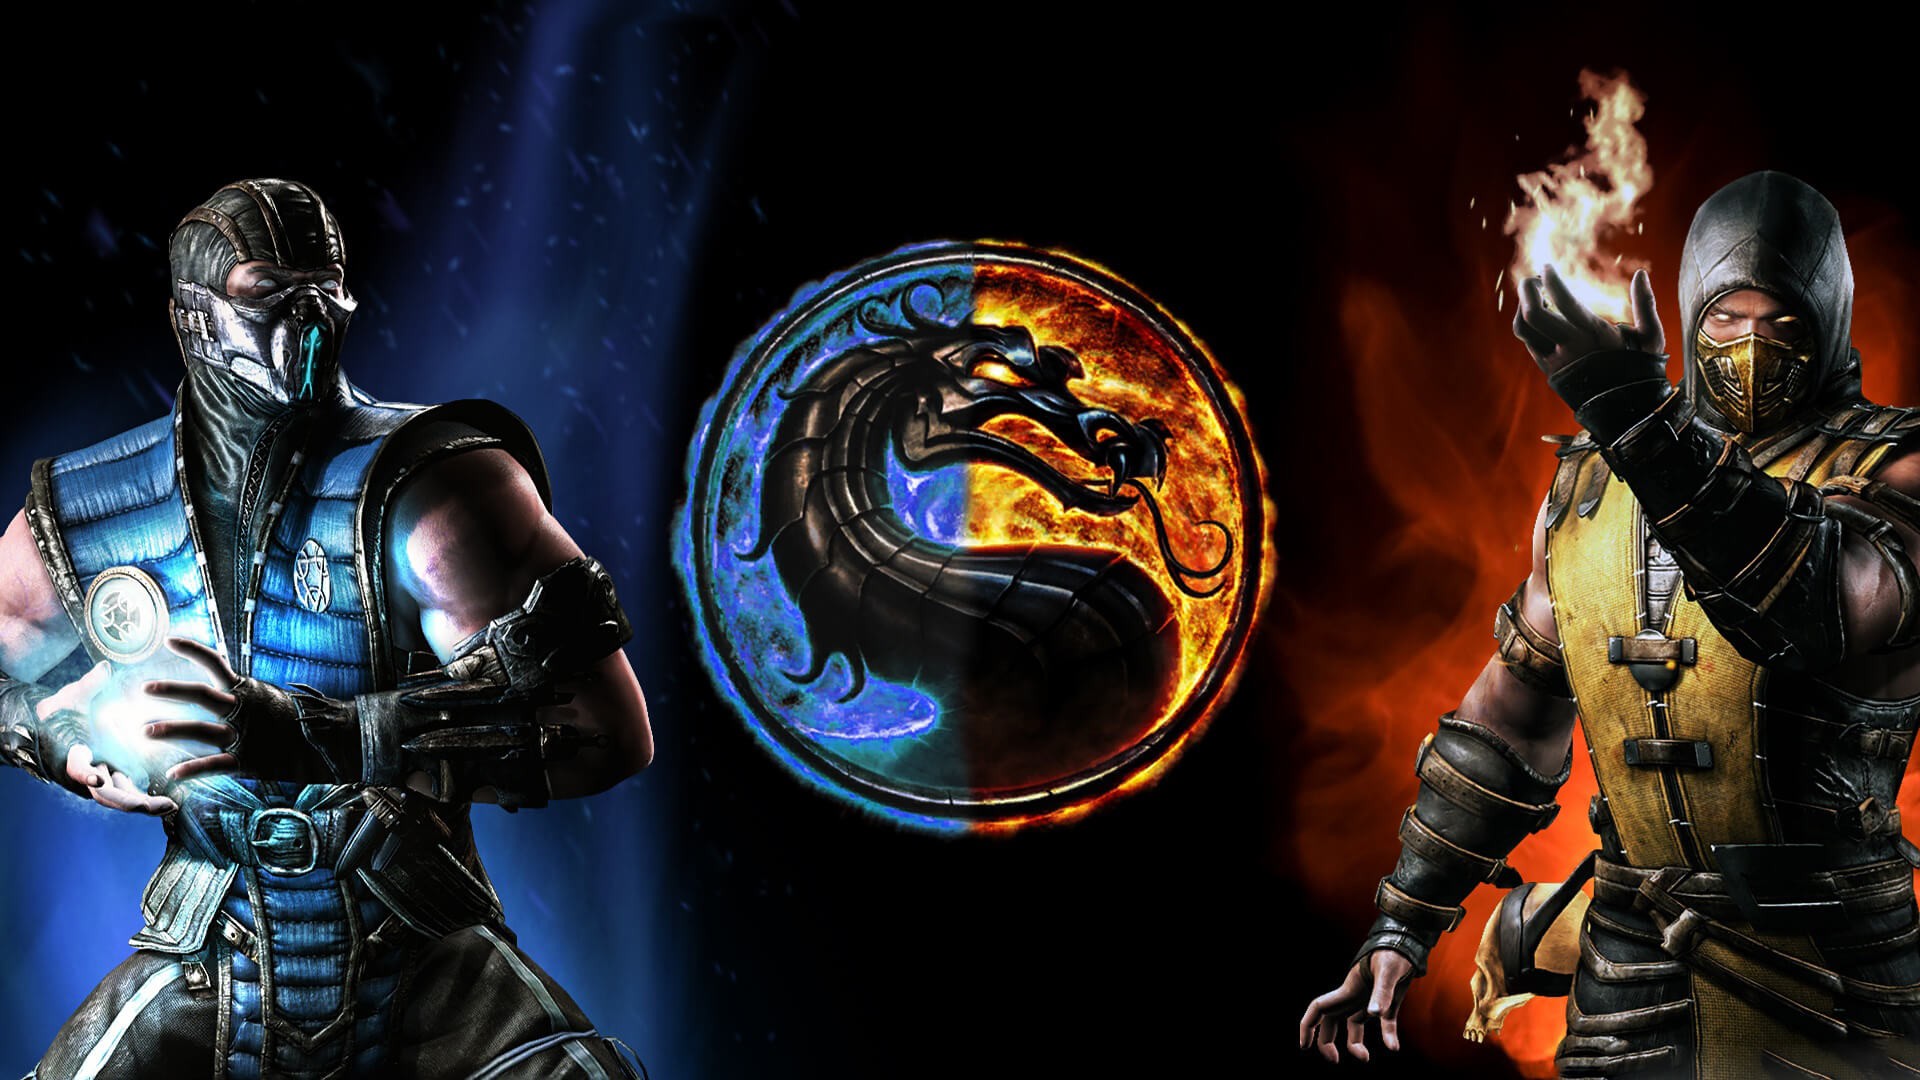 Subzero Vs Scorpion In Mortal Kombat X Wallpaper - Mortal Kombat X Wallpaper Hd - HD Wallpaper 